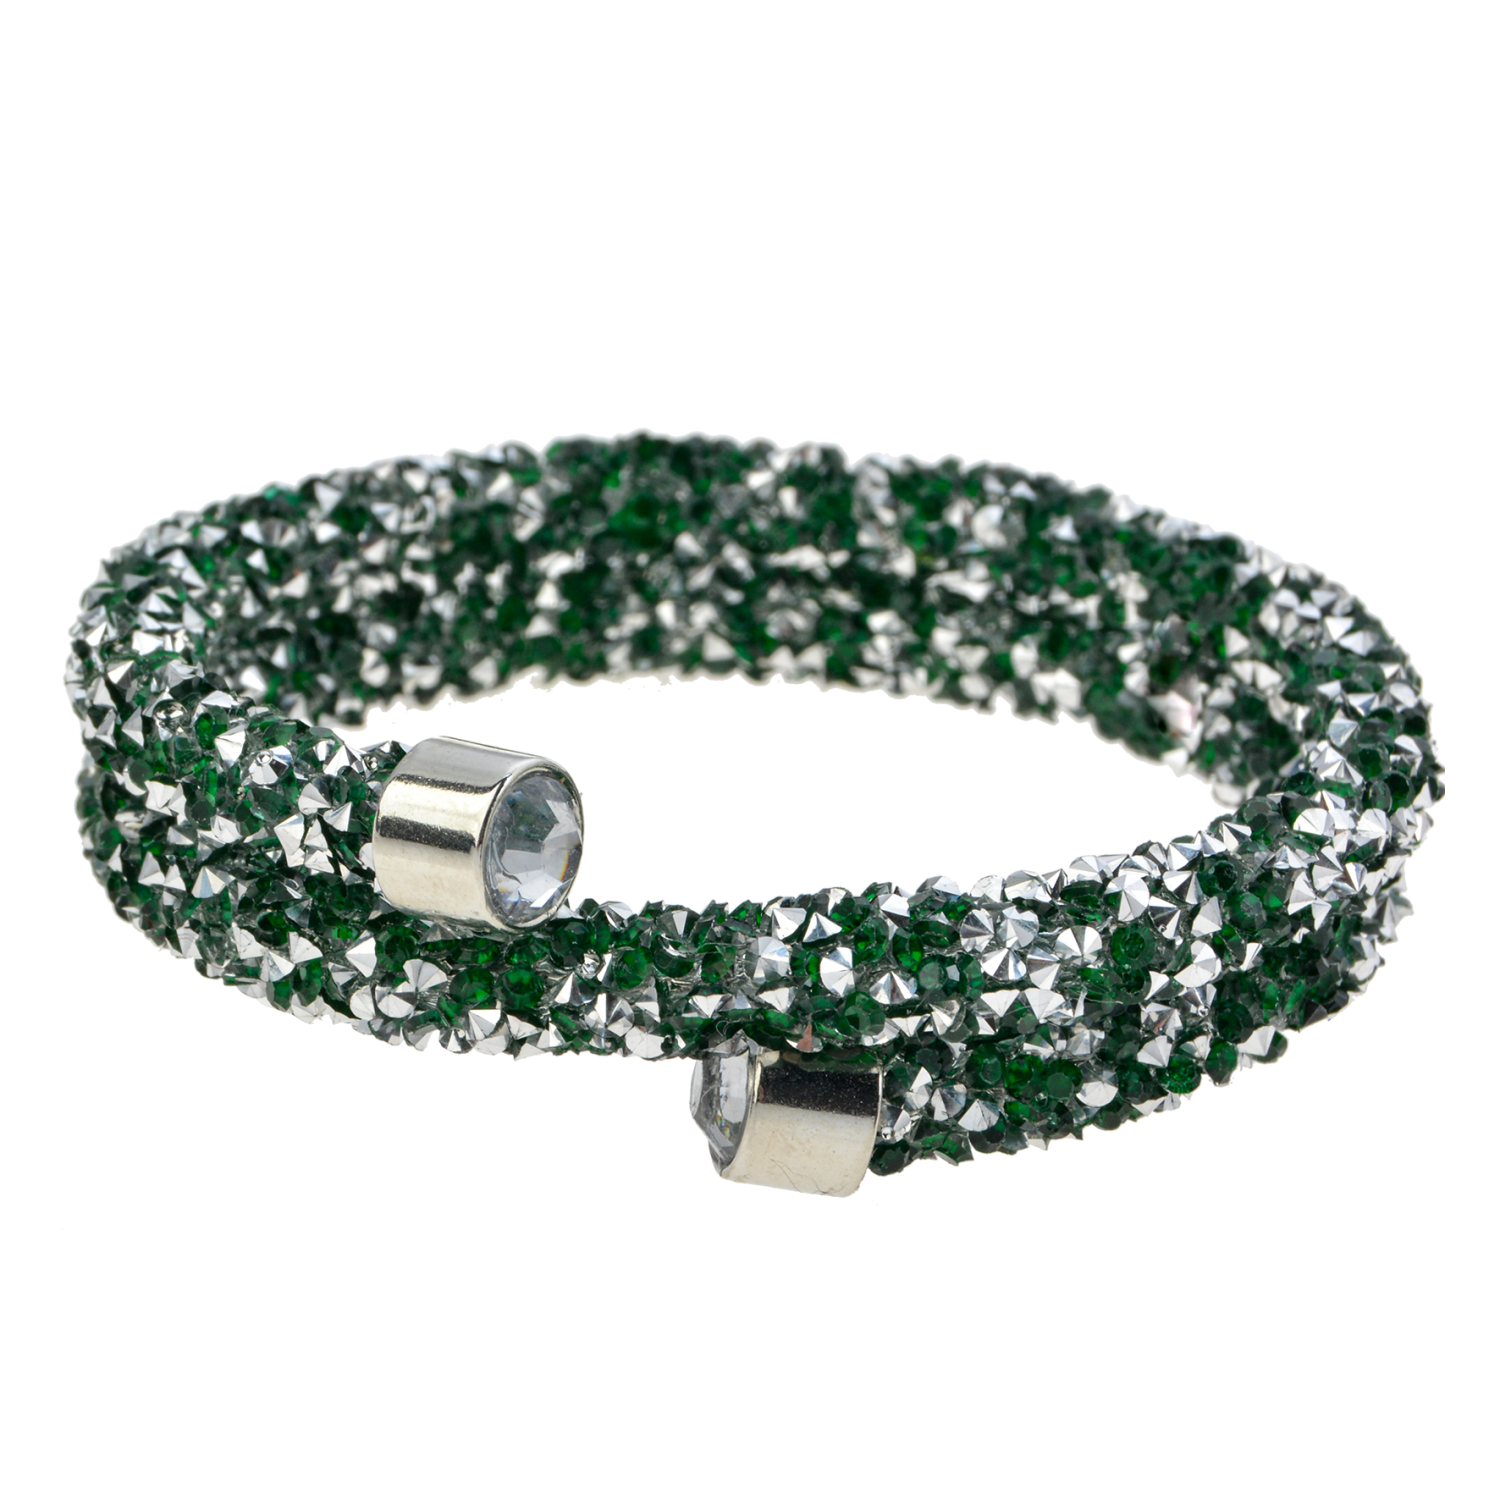 Armband bracelets groen zilver p32